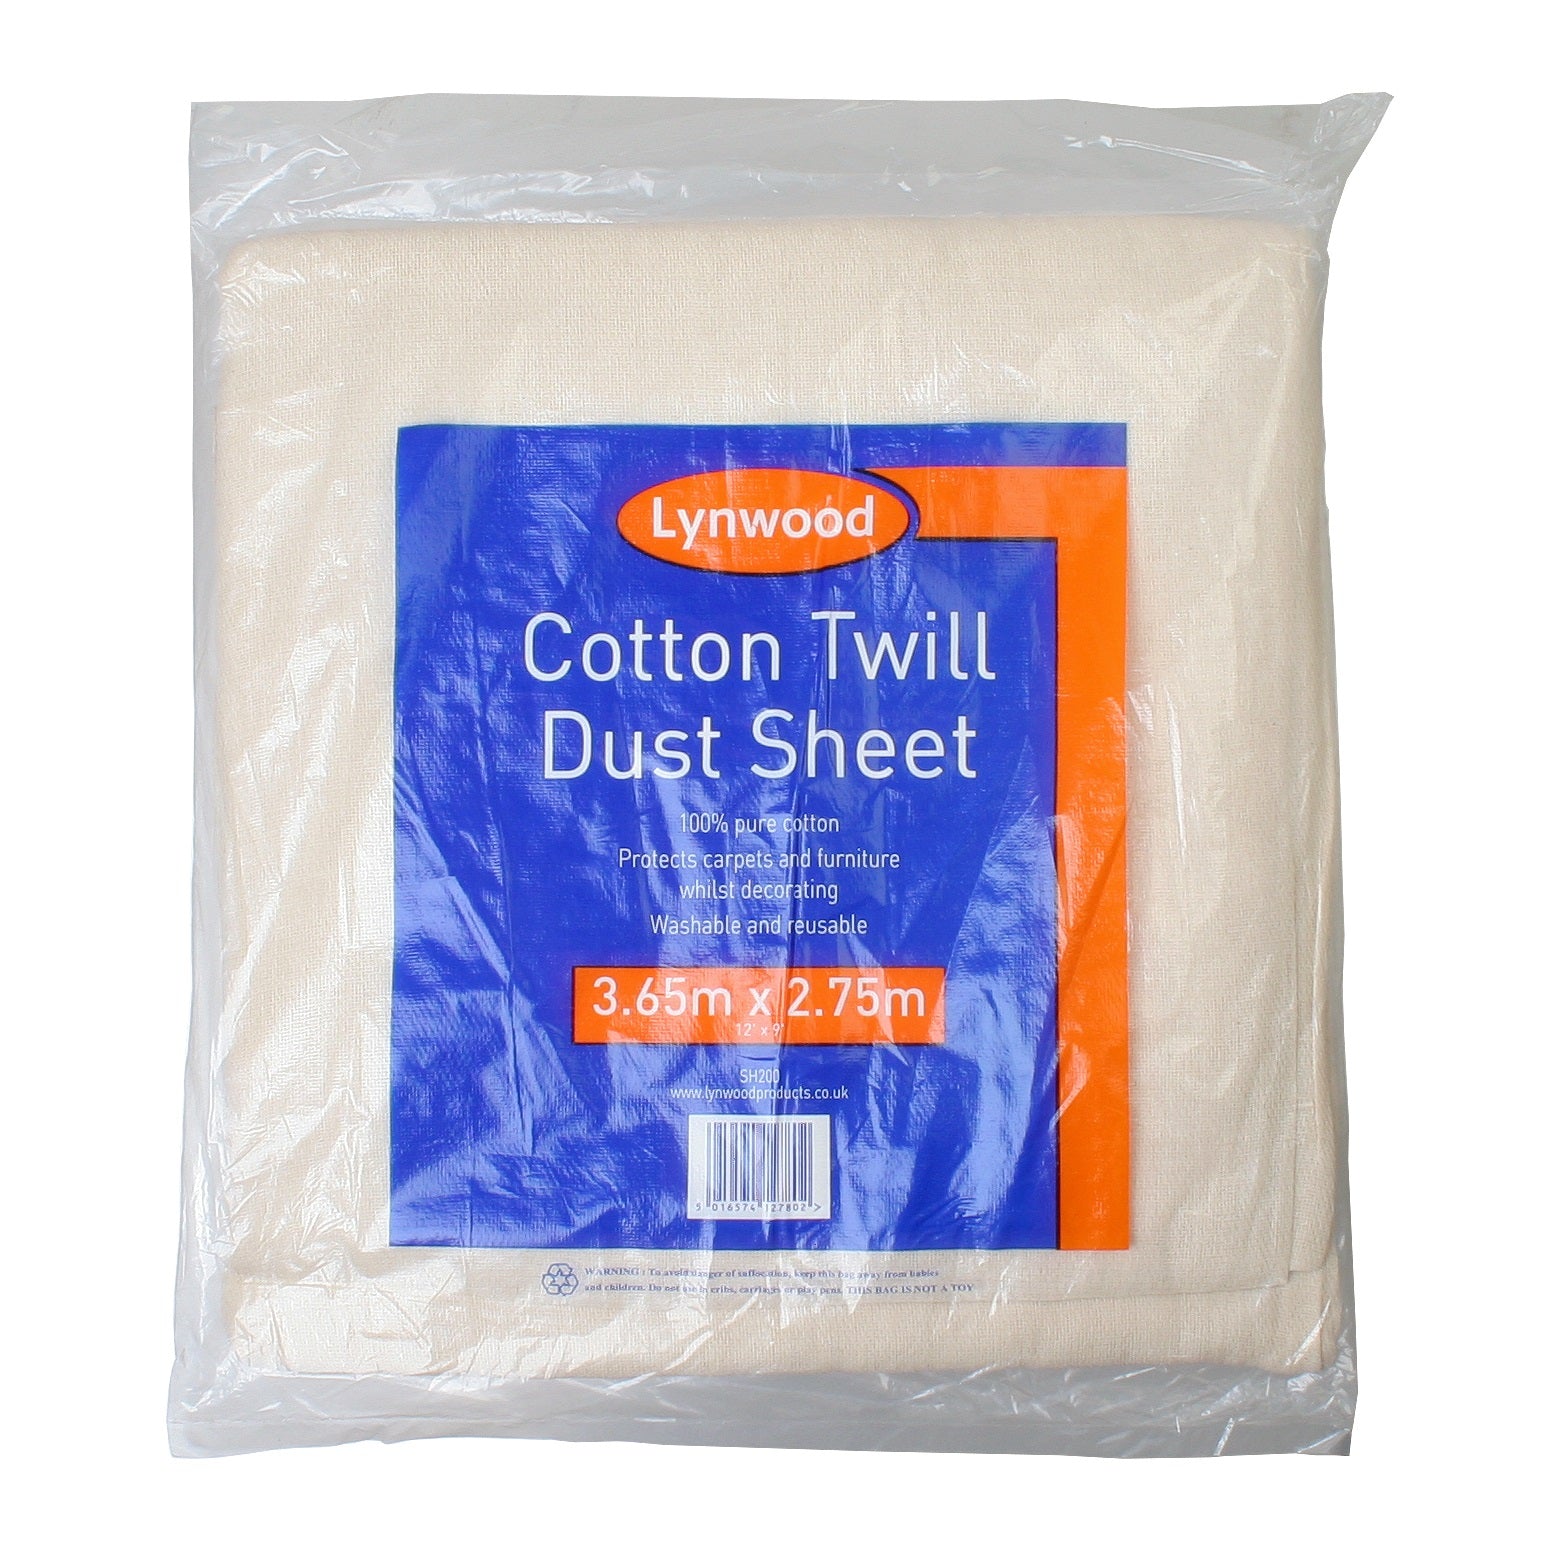 Lynwood SH200 Cotton Twill Dust Sheet 12' x 9' - Premium Dust Sheets from HARRIS - Just $8.5! Shop now at W Hurst & Son (IW) Ltd